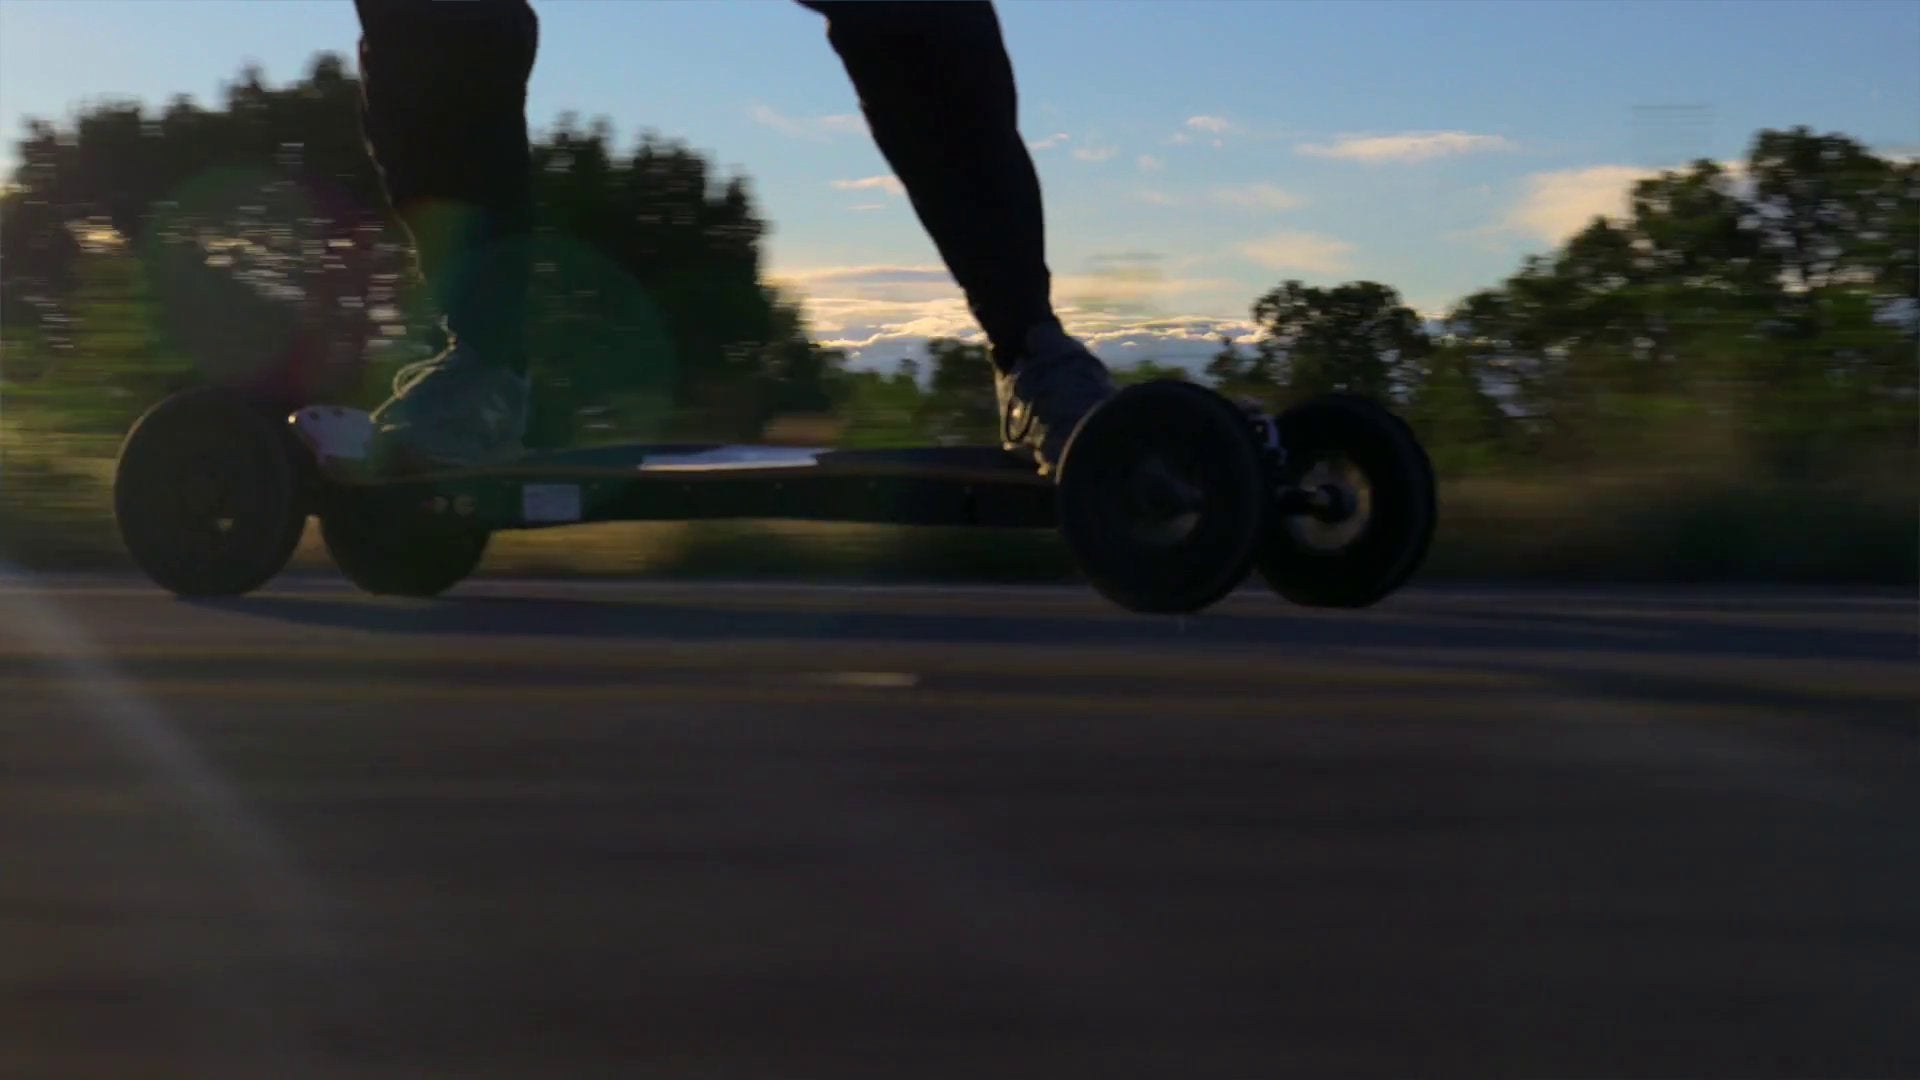 Lacroix Skateboards